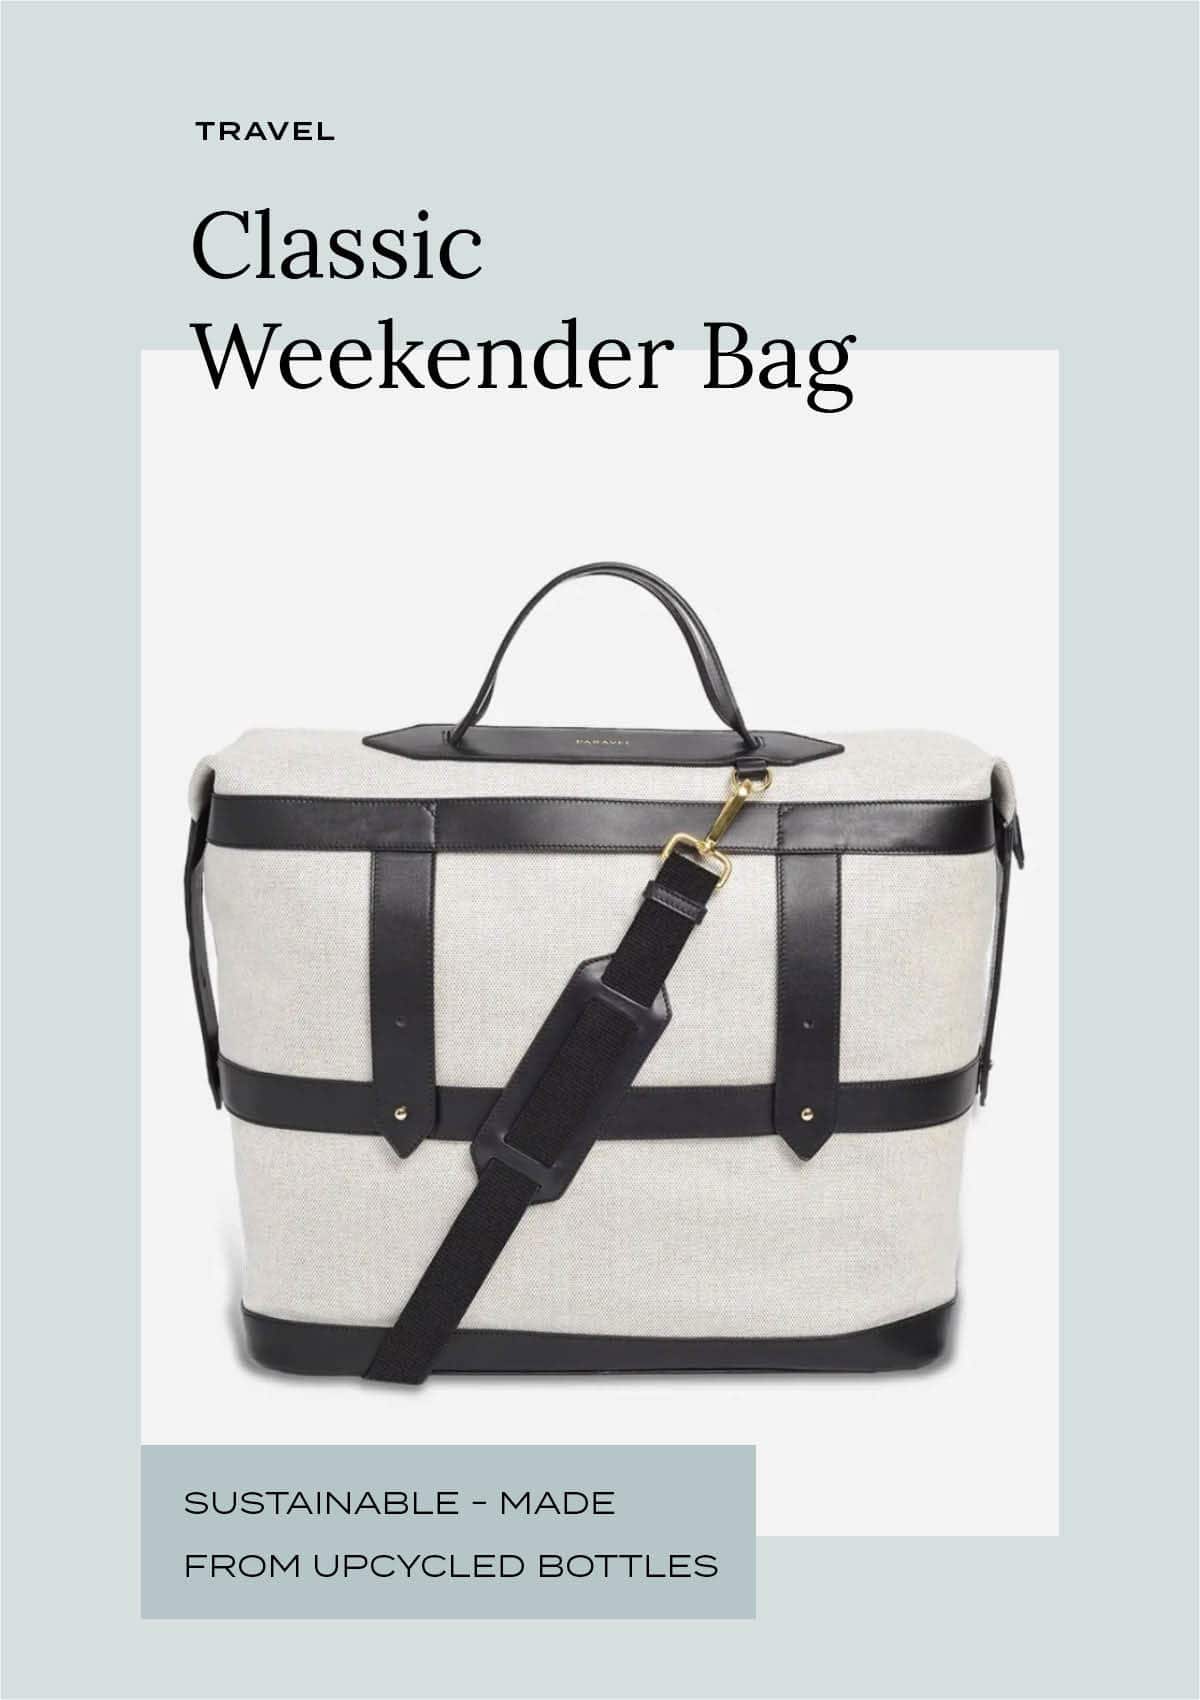 Paravel Weekender Bag - perfect travel bag